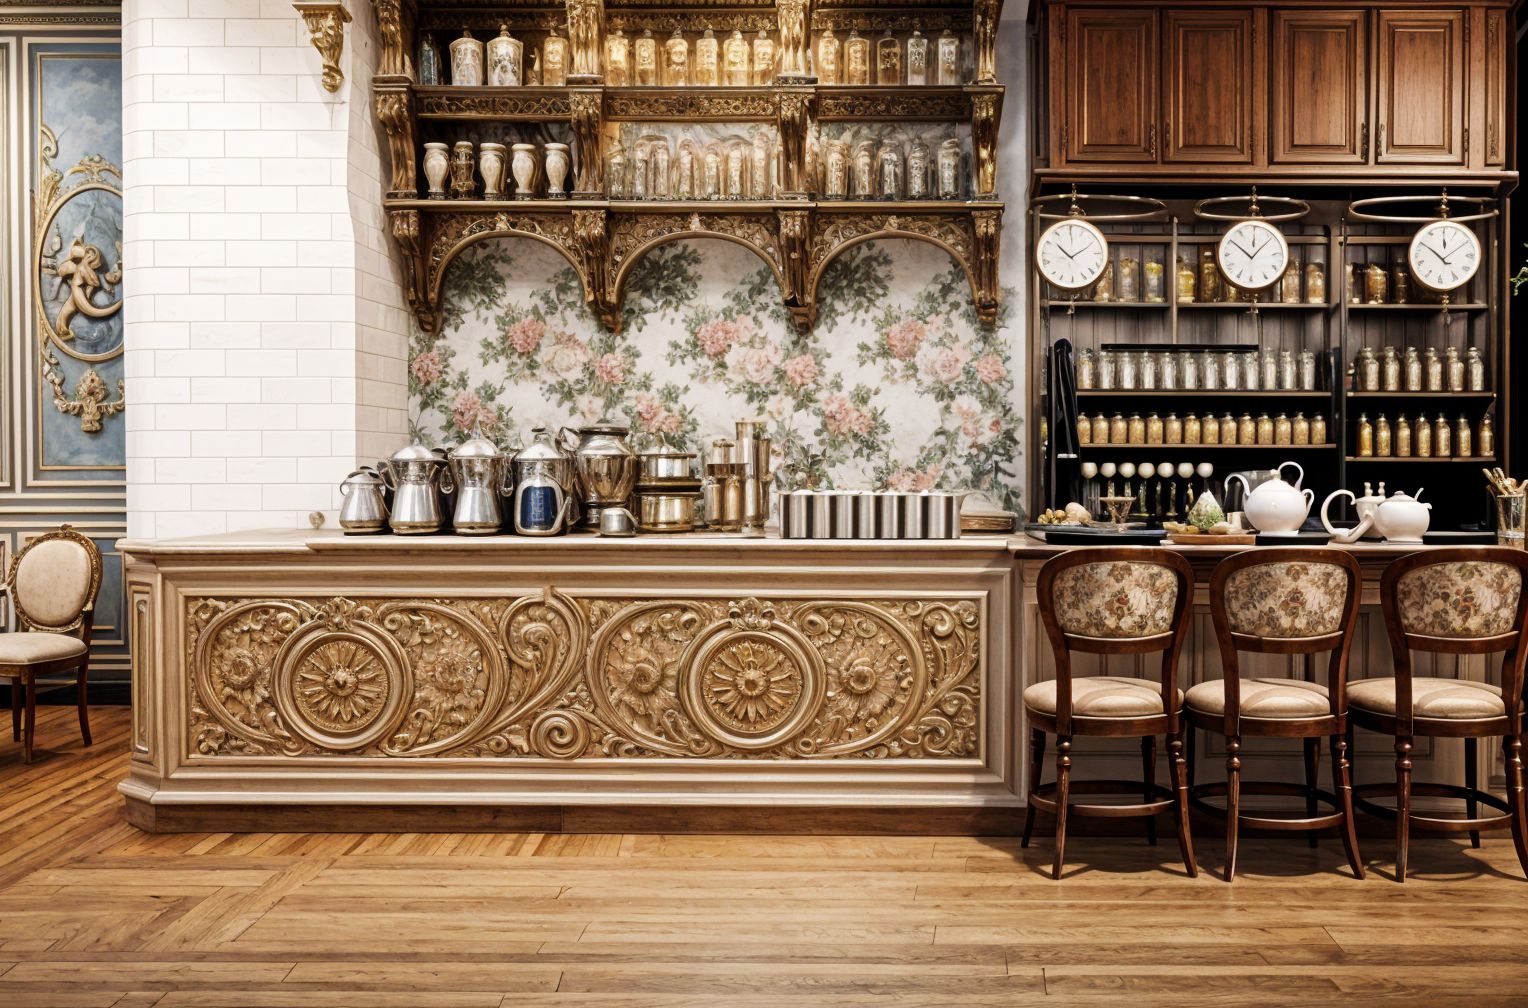 Victorian Coffee Shop